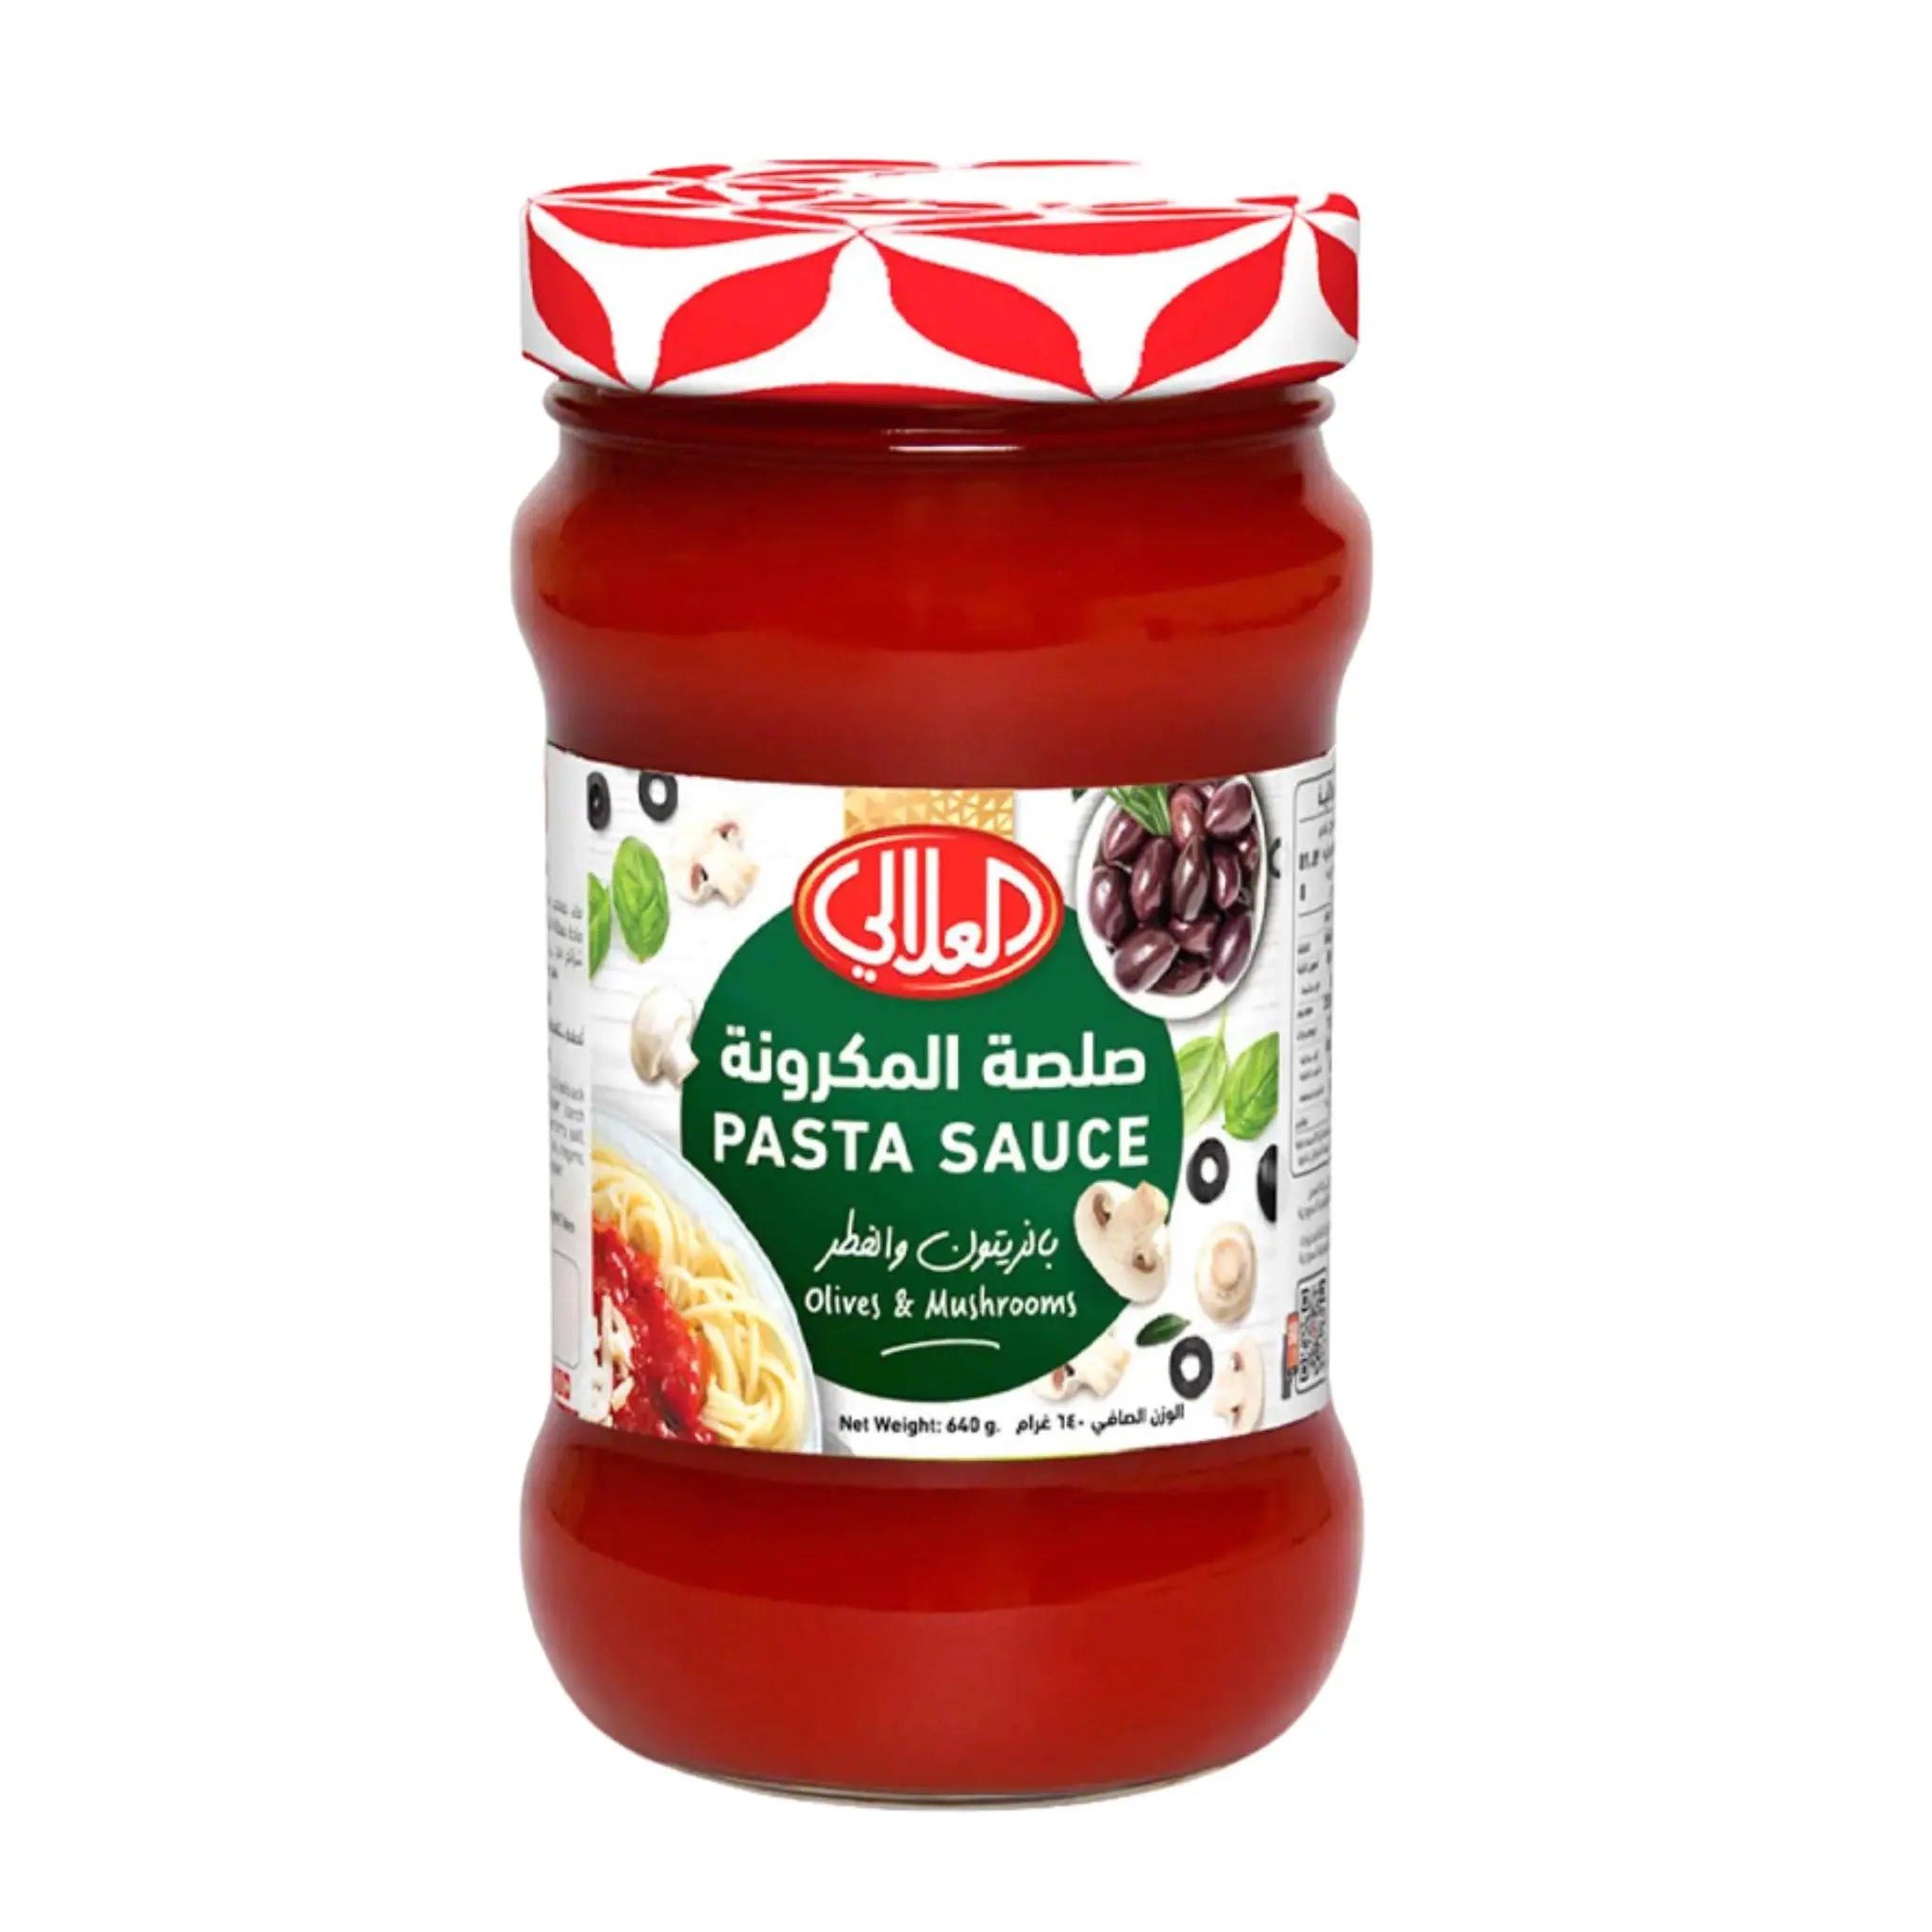 Al Alali Pasta Sauce Olives & Mushrooms 640g - 12x640g (1 carton) - Marino.AE